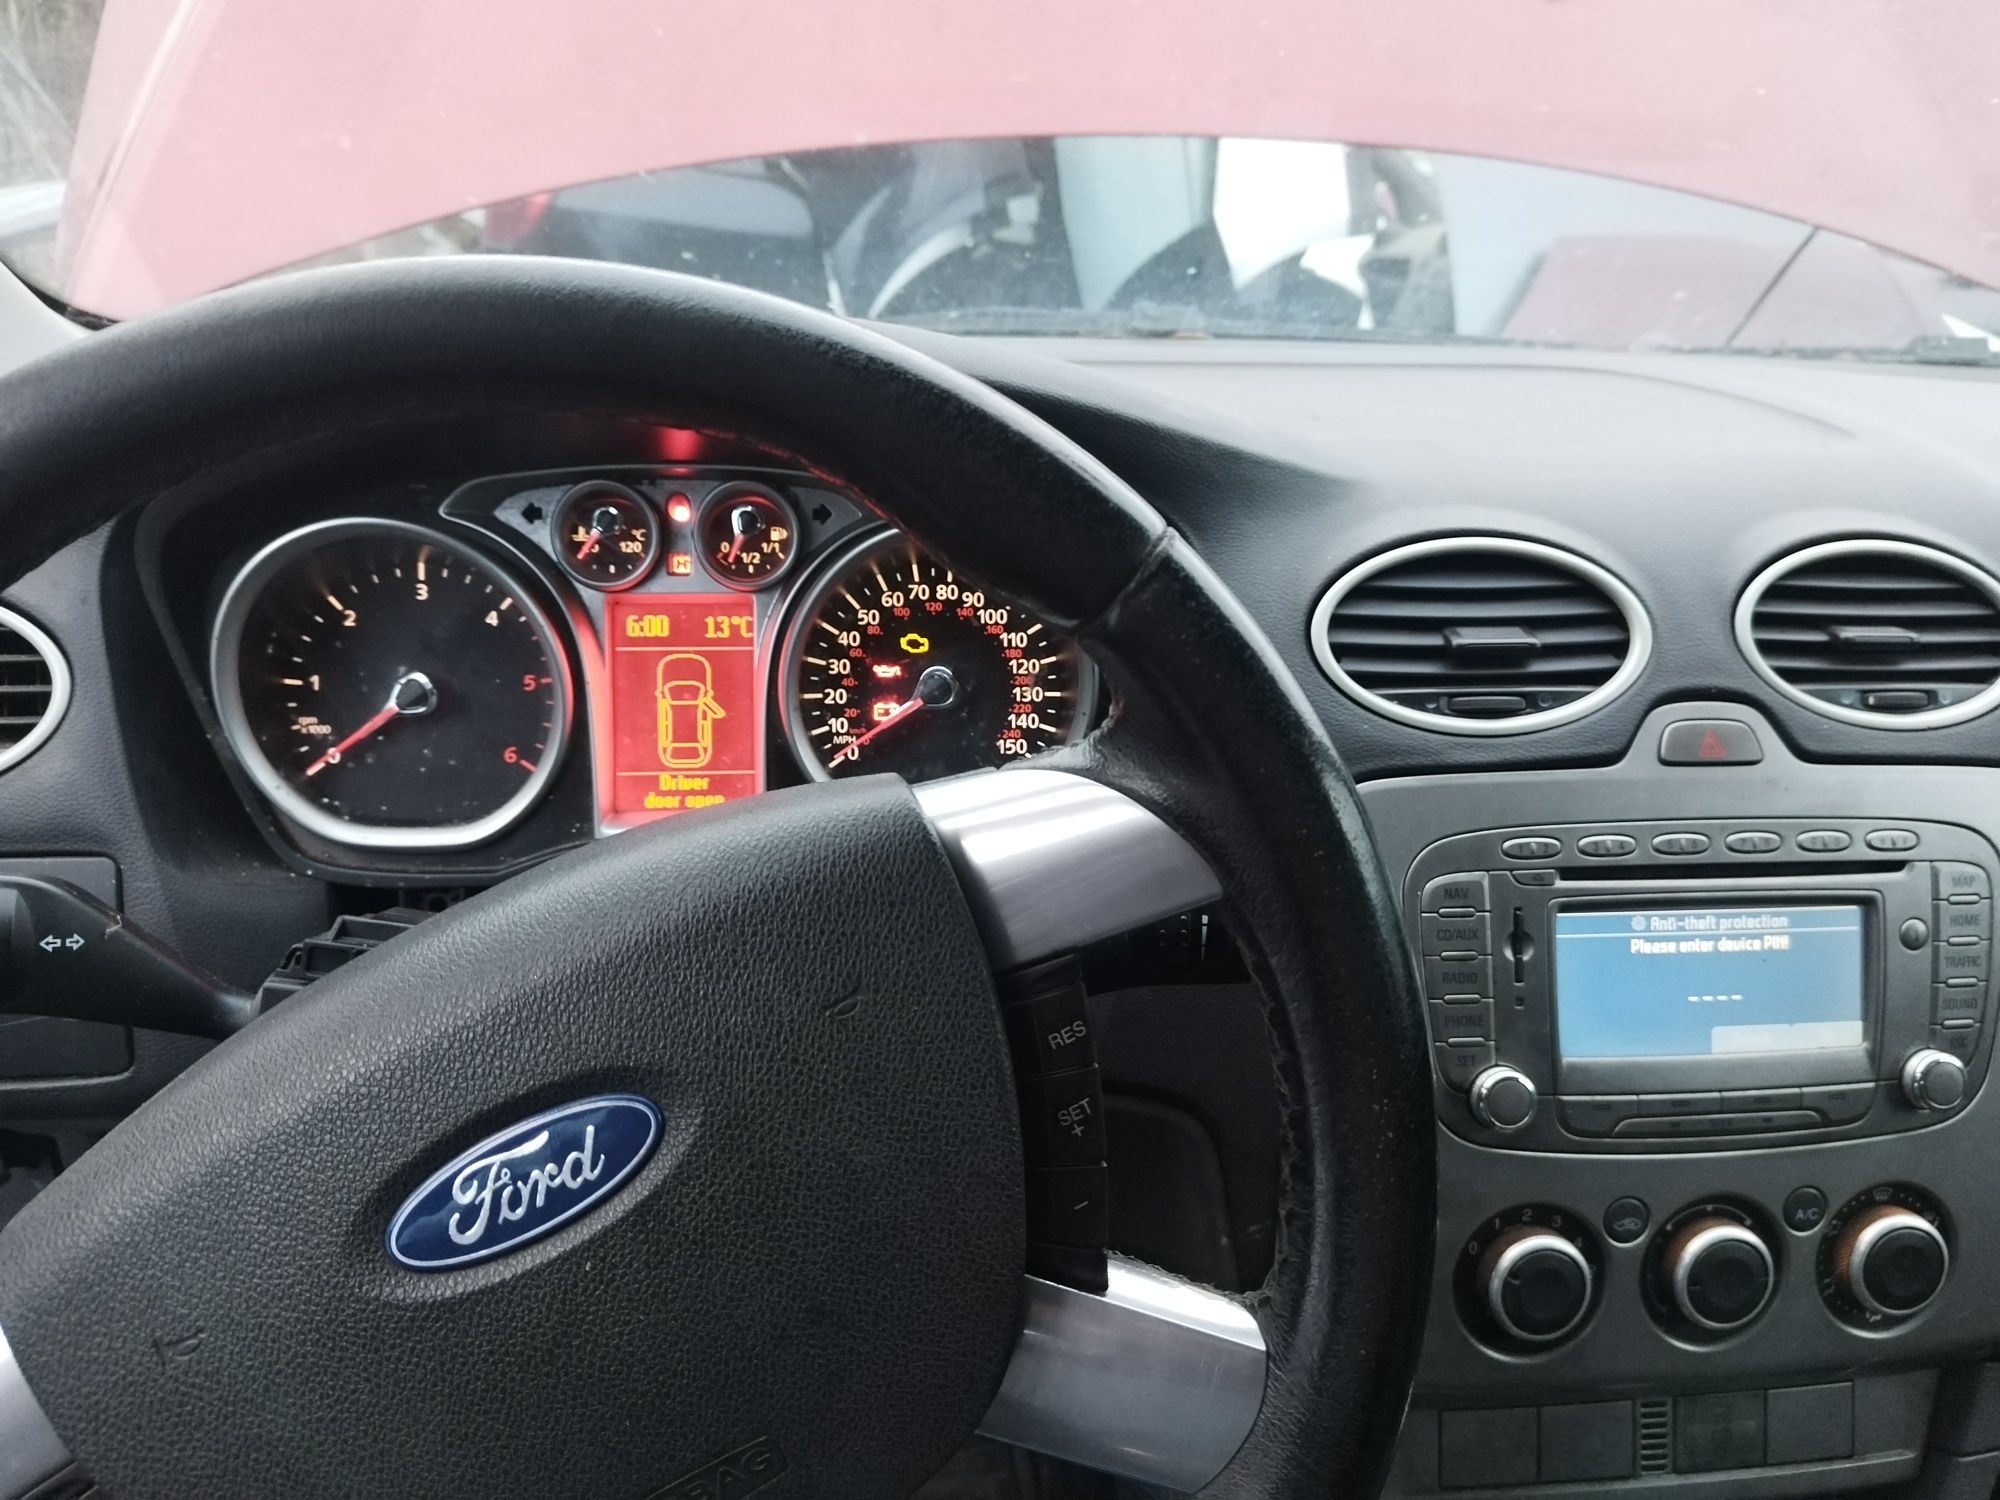 Ceasuri bord Ford Focus 1.6 diesel, facelift, afisaj mare